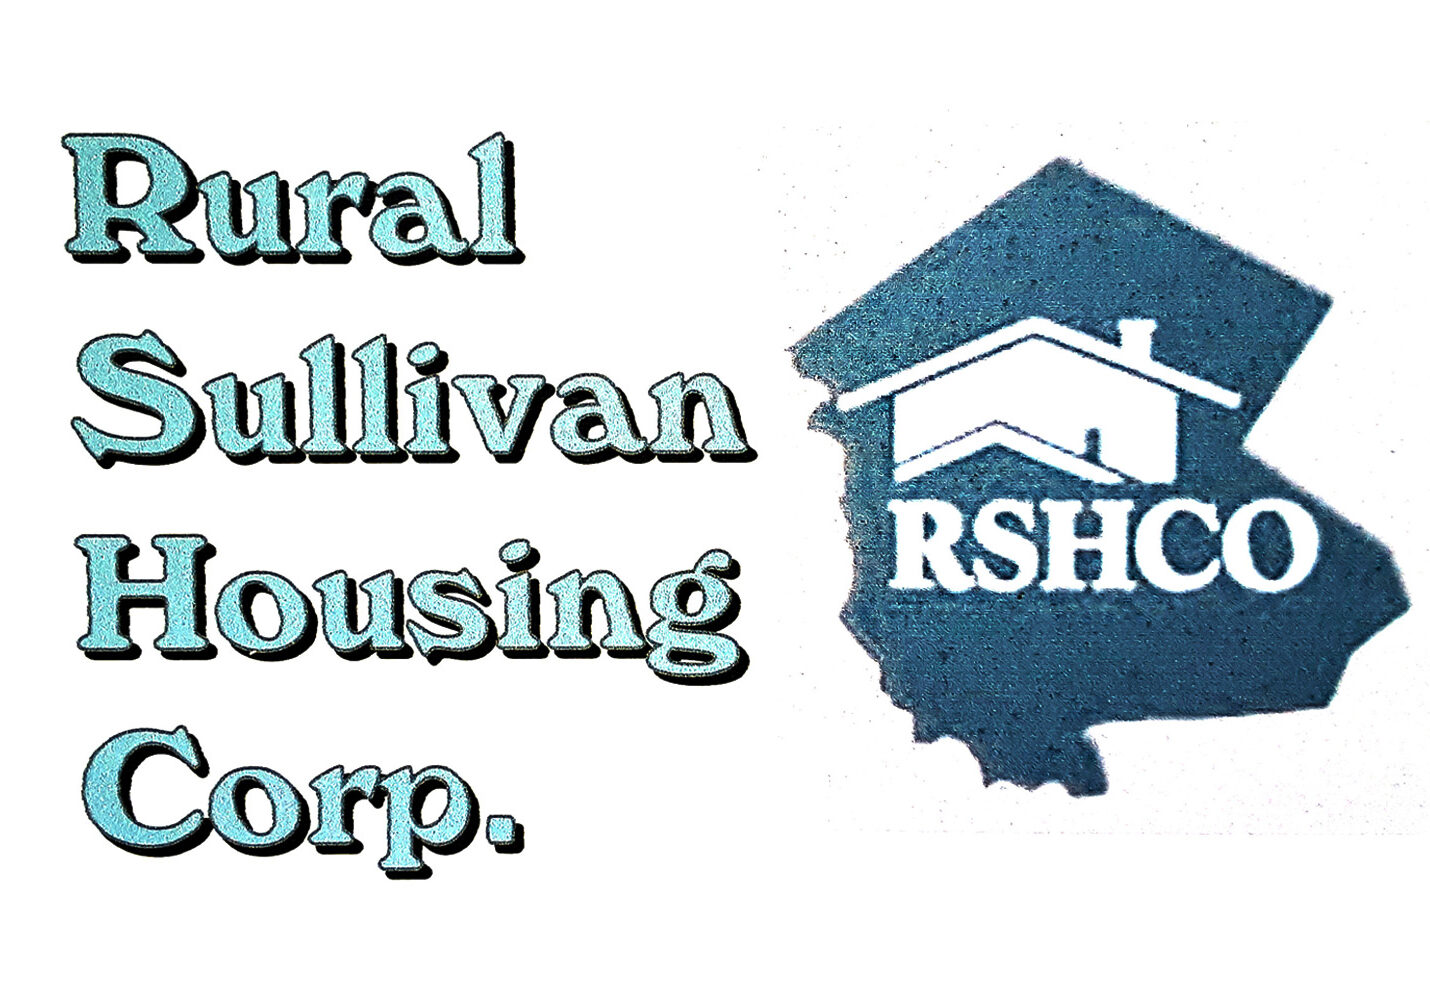 Rural Sullivan Housing Corp